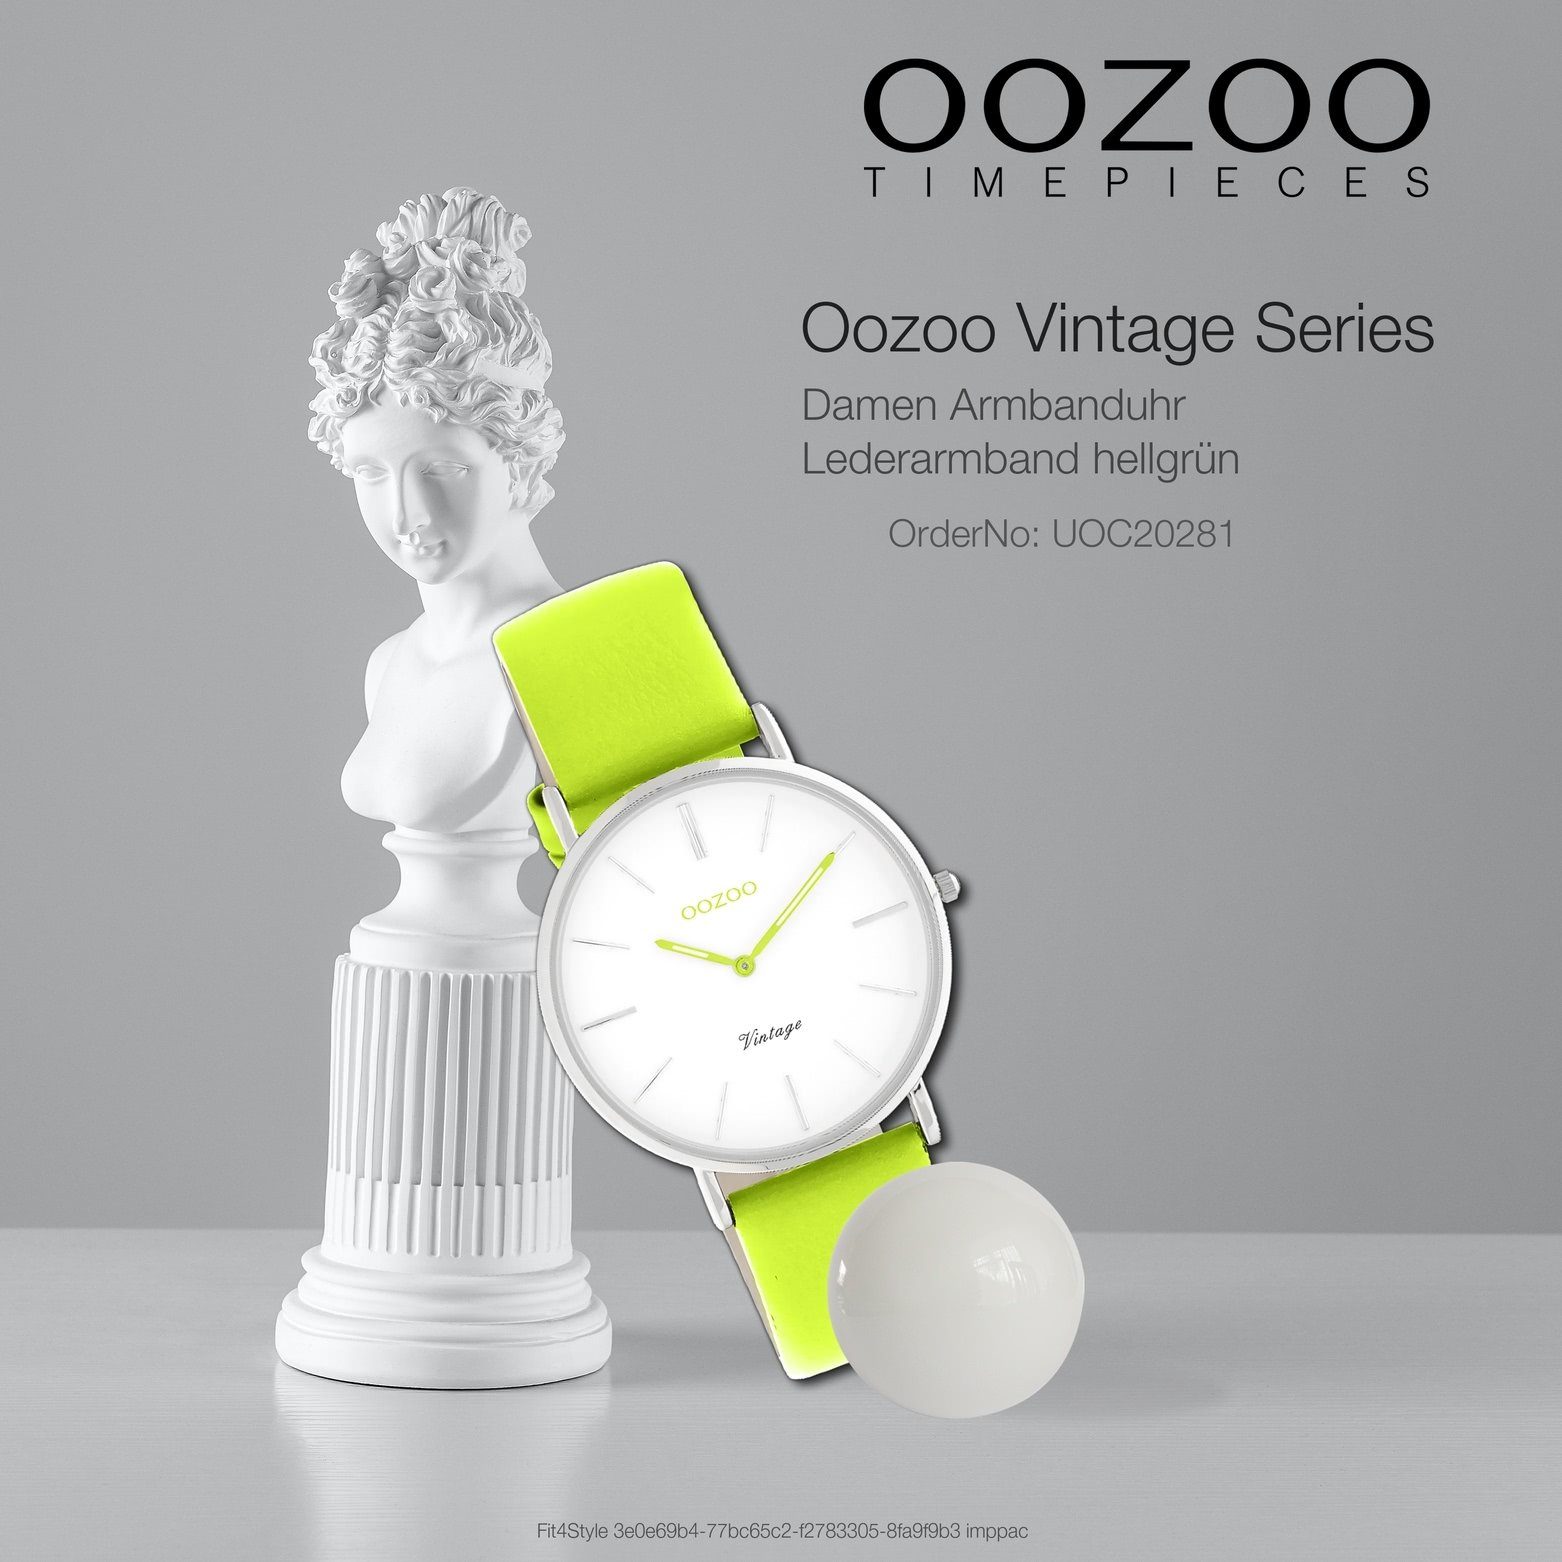 OOZOO 36mm) rund, Vintage Lederarmband, Fashion-Style Series, Quarzuhr (ca. Damen Armbanduhr Damenuhr Oozoo mittel